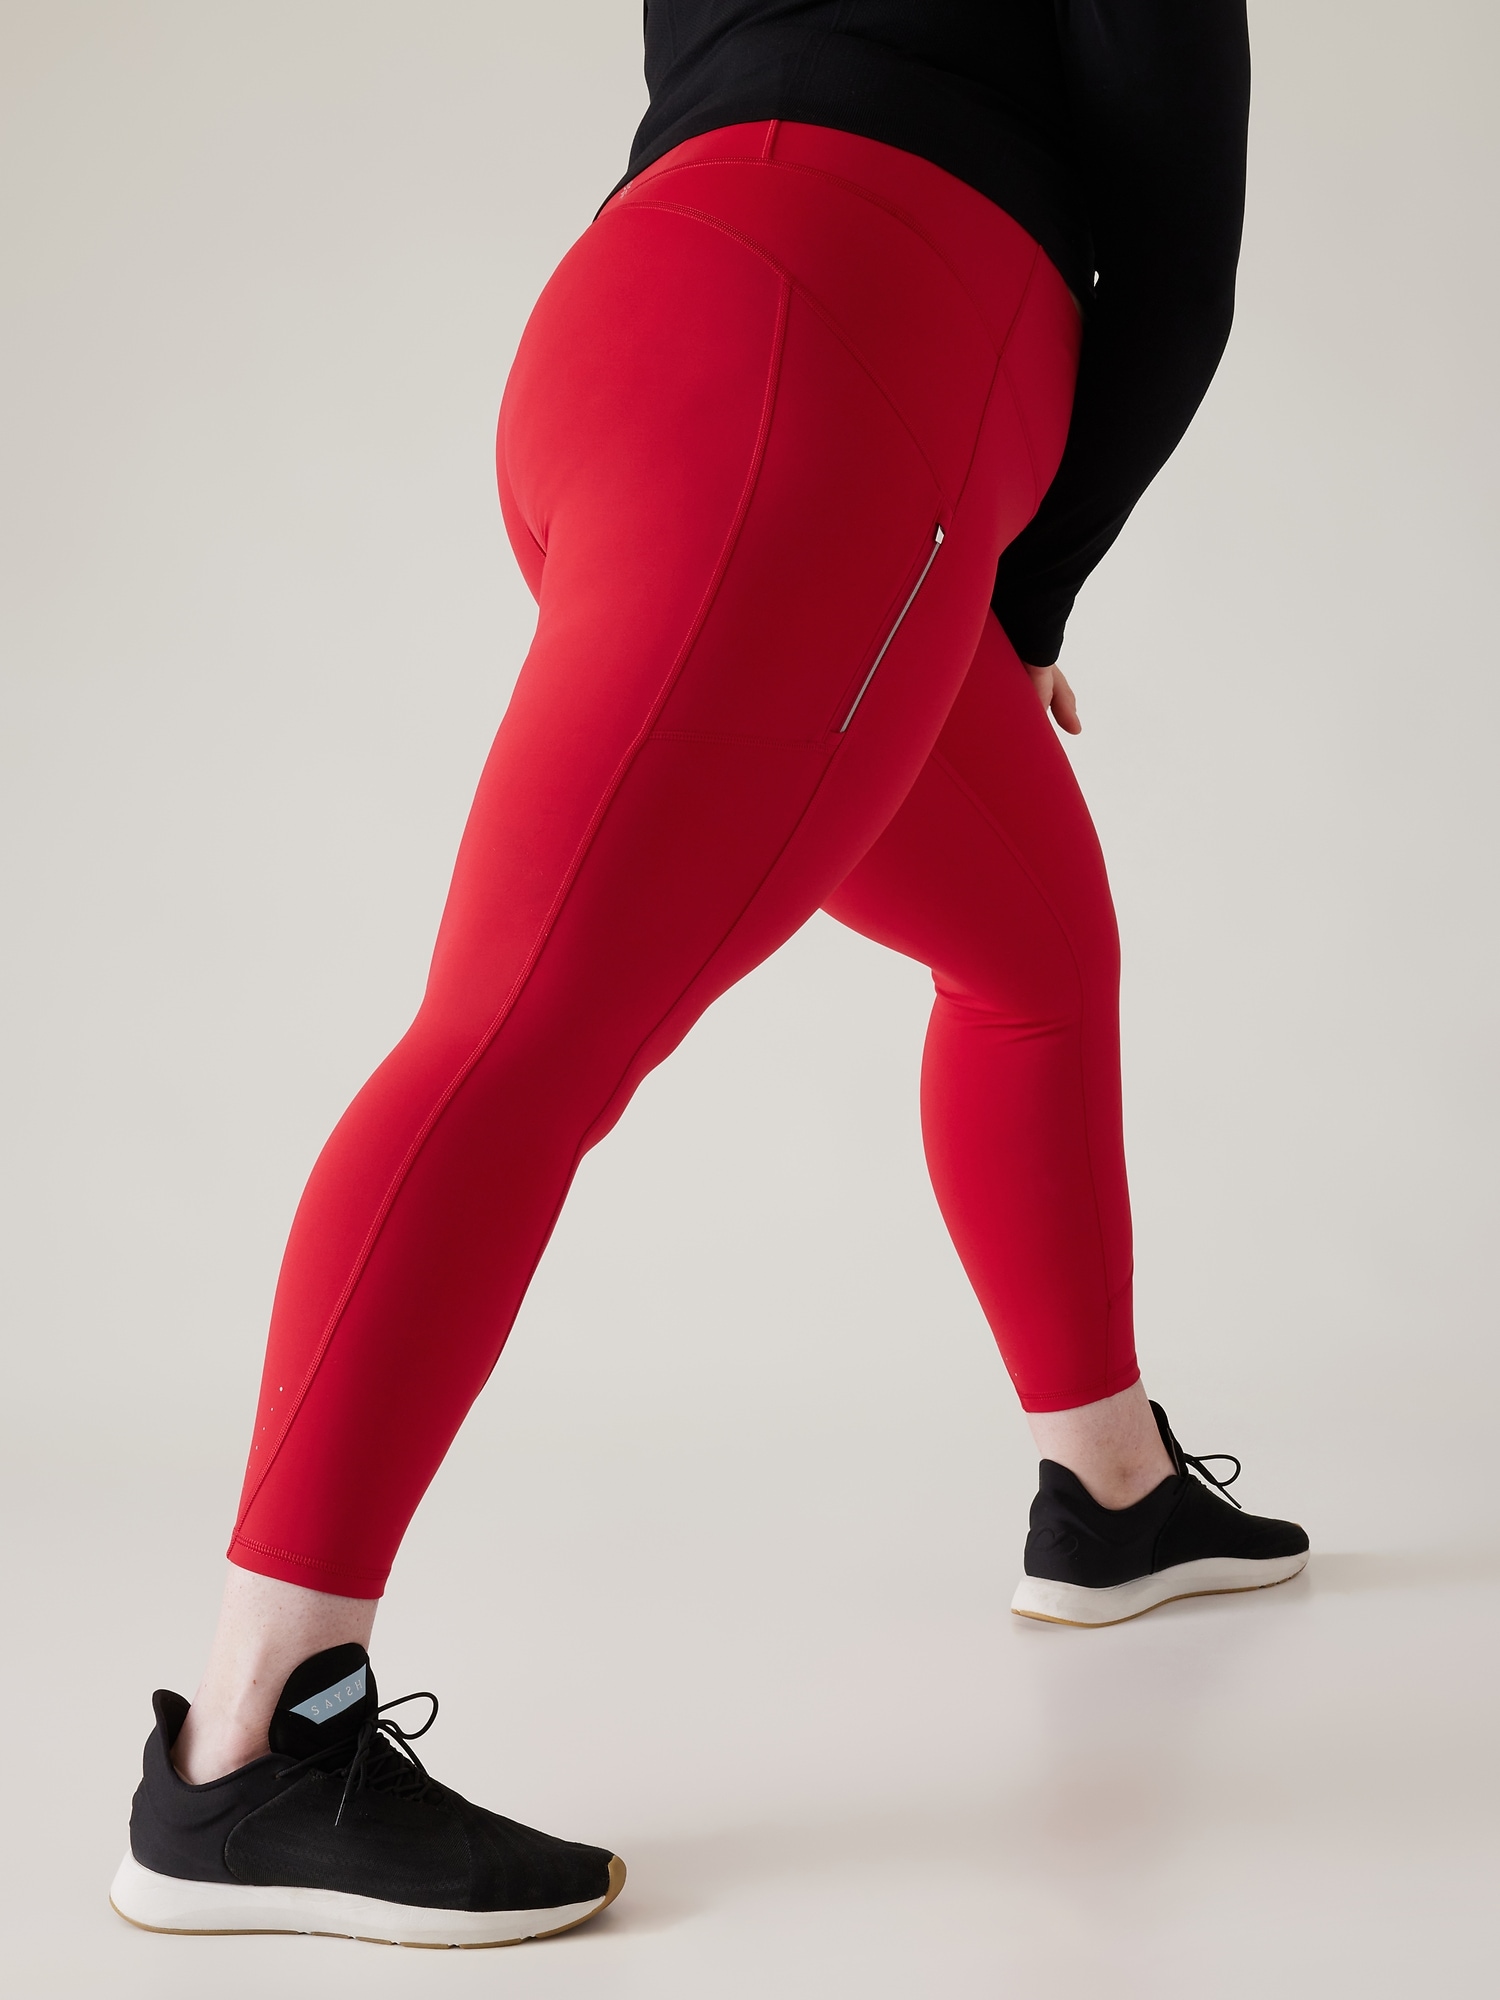 Athleta Rainier Tight, We Compared 8 Athleta Leggings So You Can Shop With  Confidence